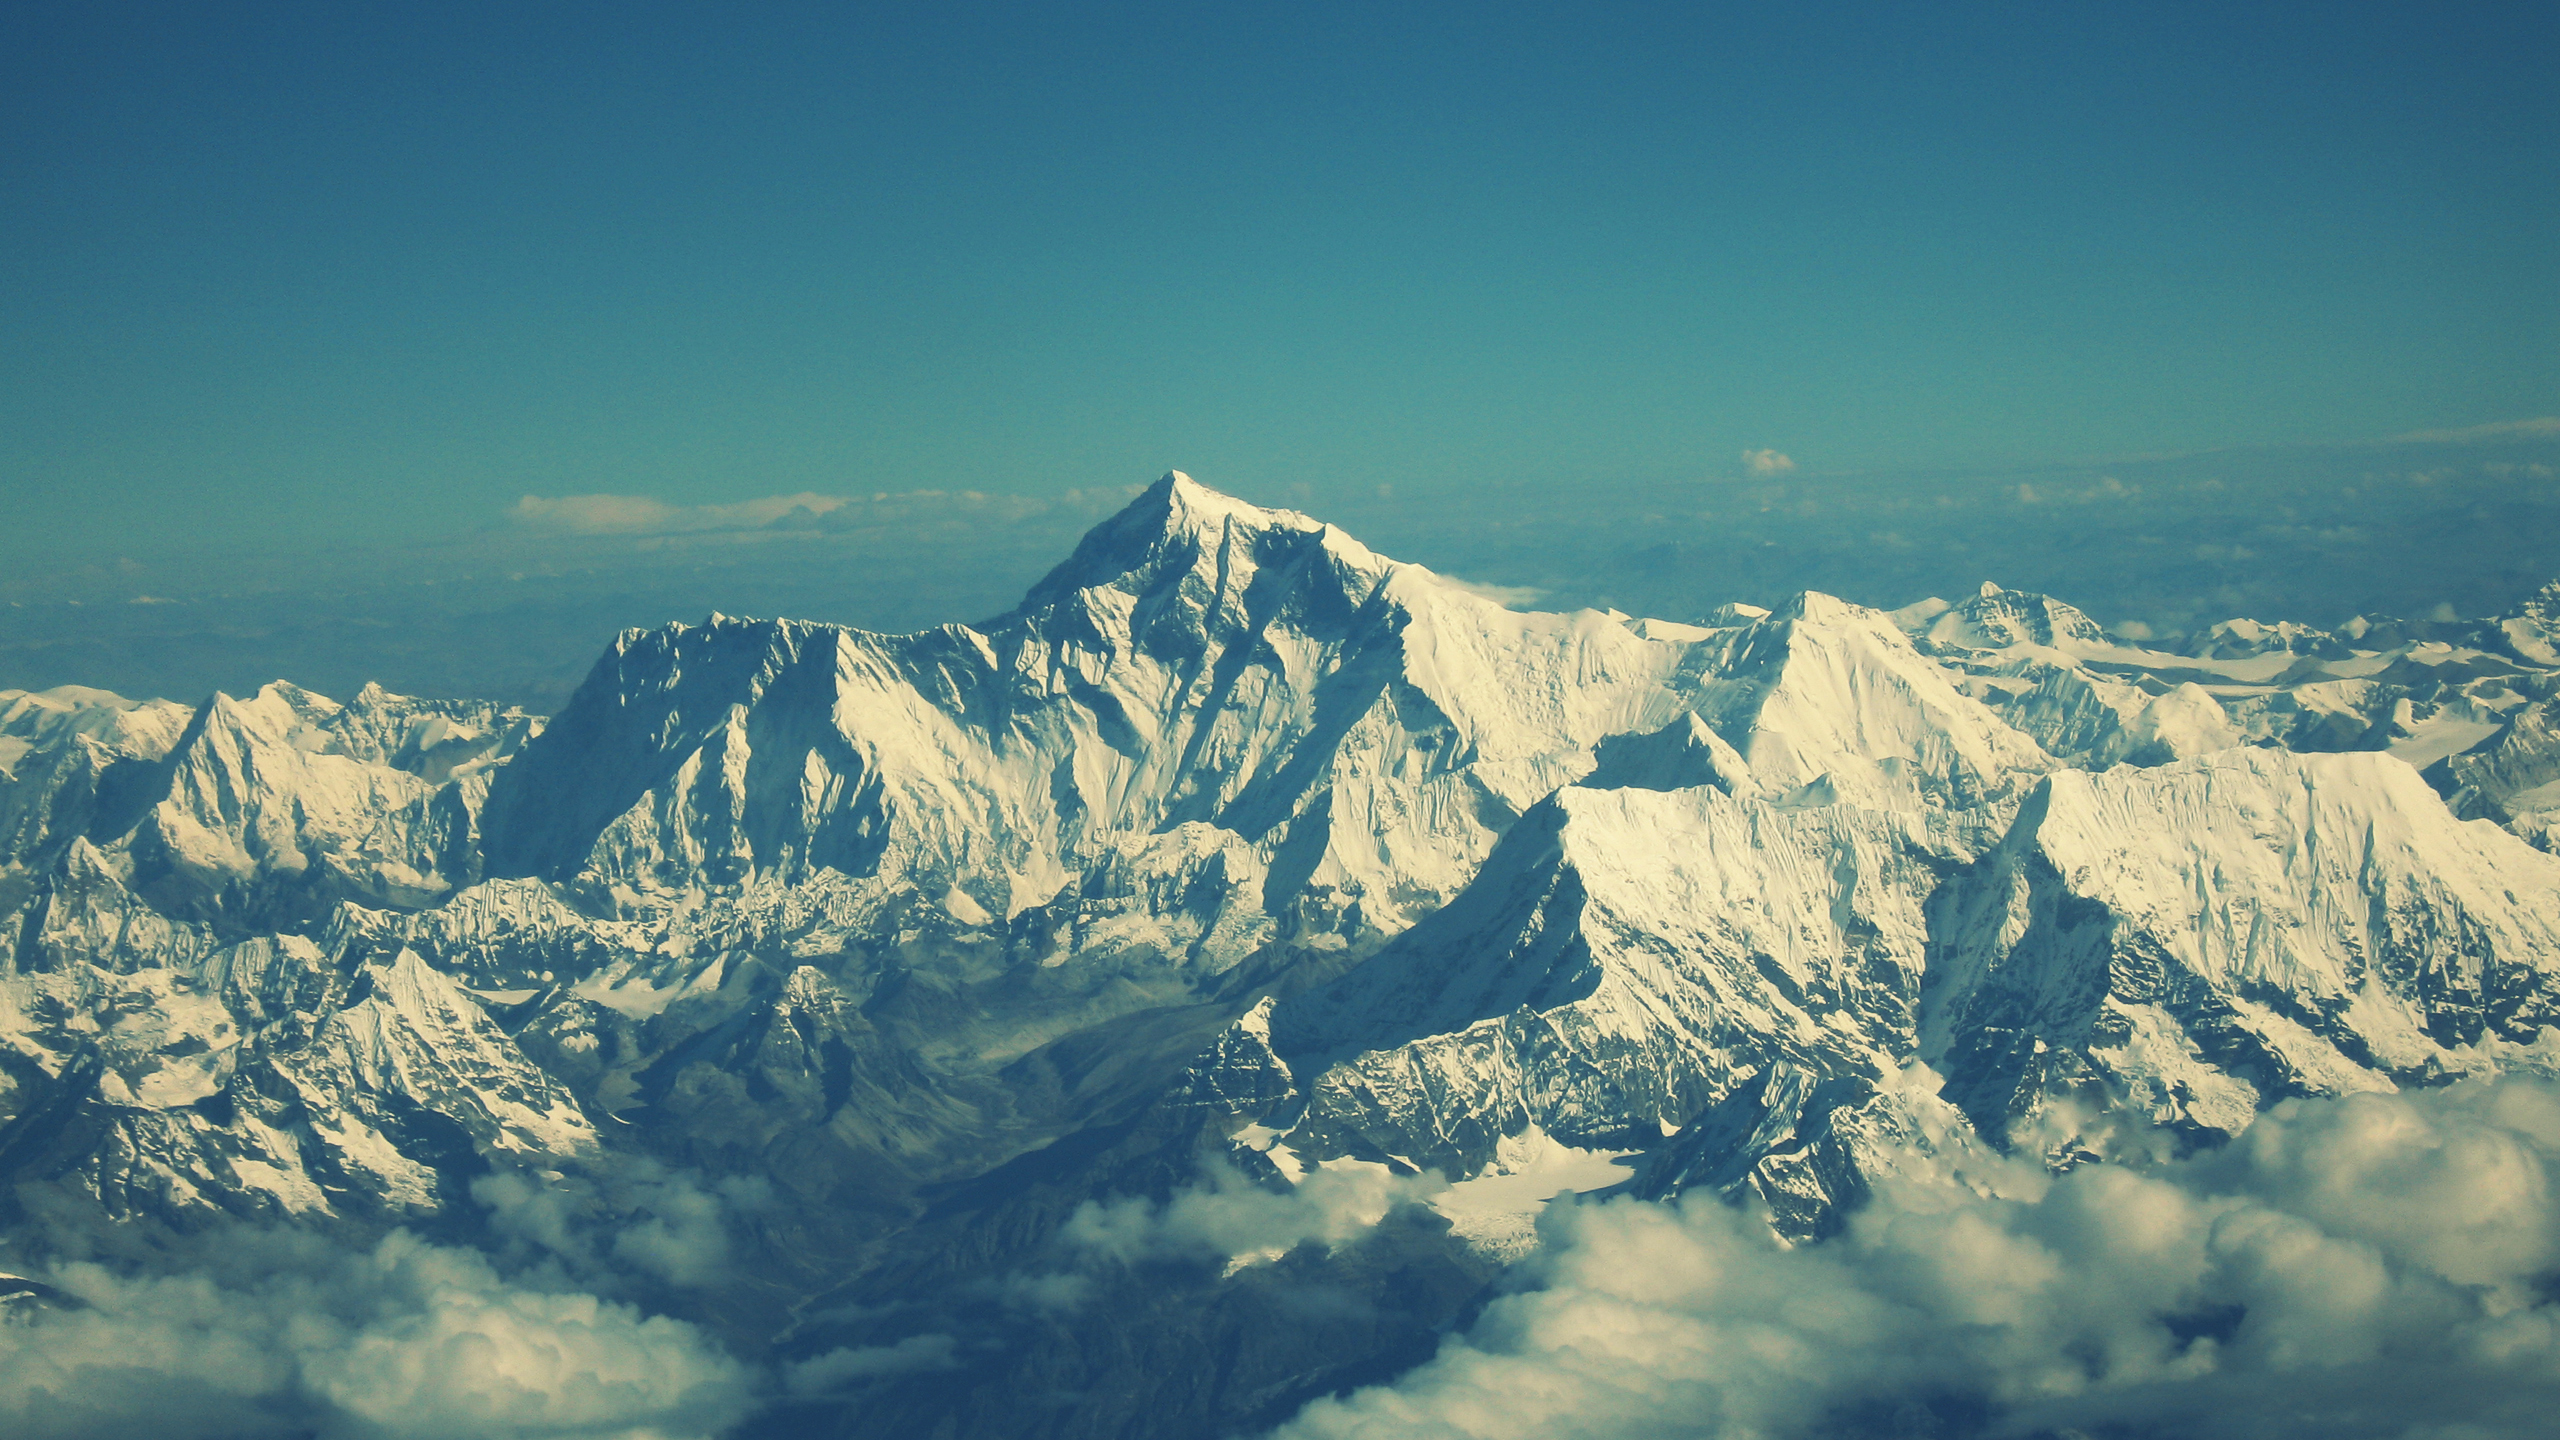 Winter Mountains Sky Clouds Landscape Snow Nature Himalayas Nepal Mount Everest 2560x1440